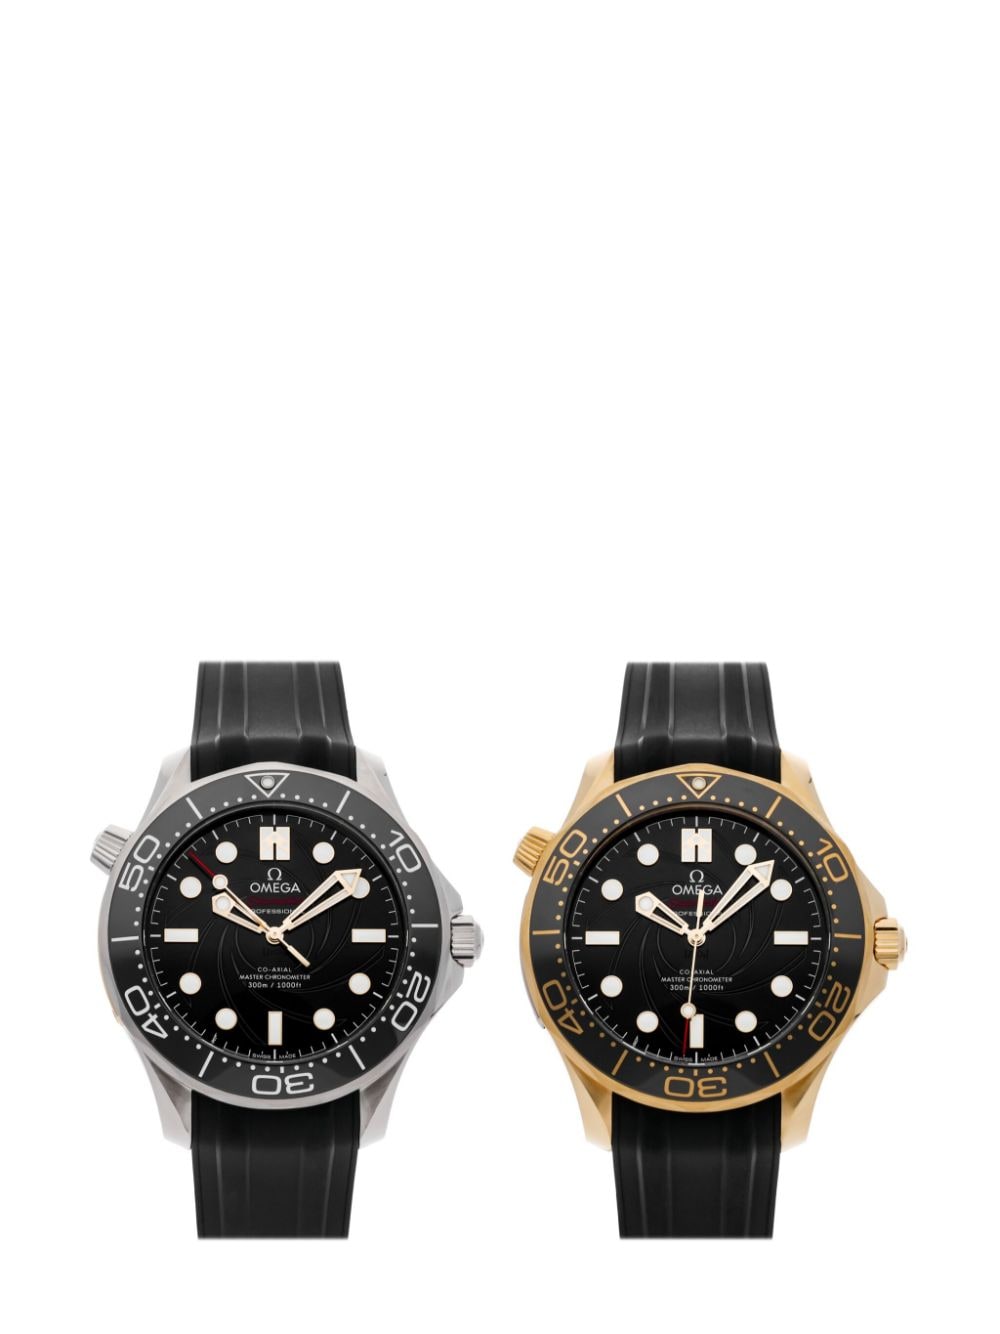 OMEGA pre-owned Seamaster Diver James Bond Limited Edition 42mm (set of two) - Black